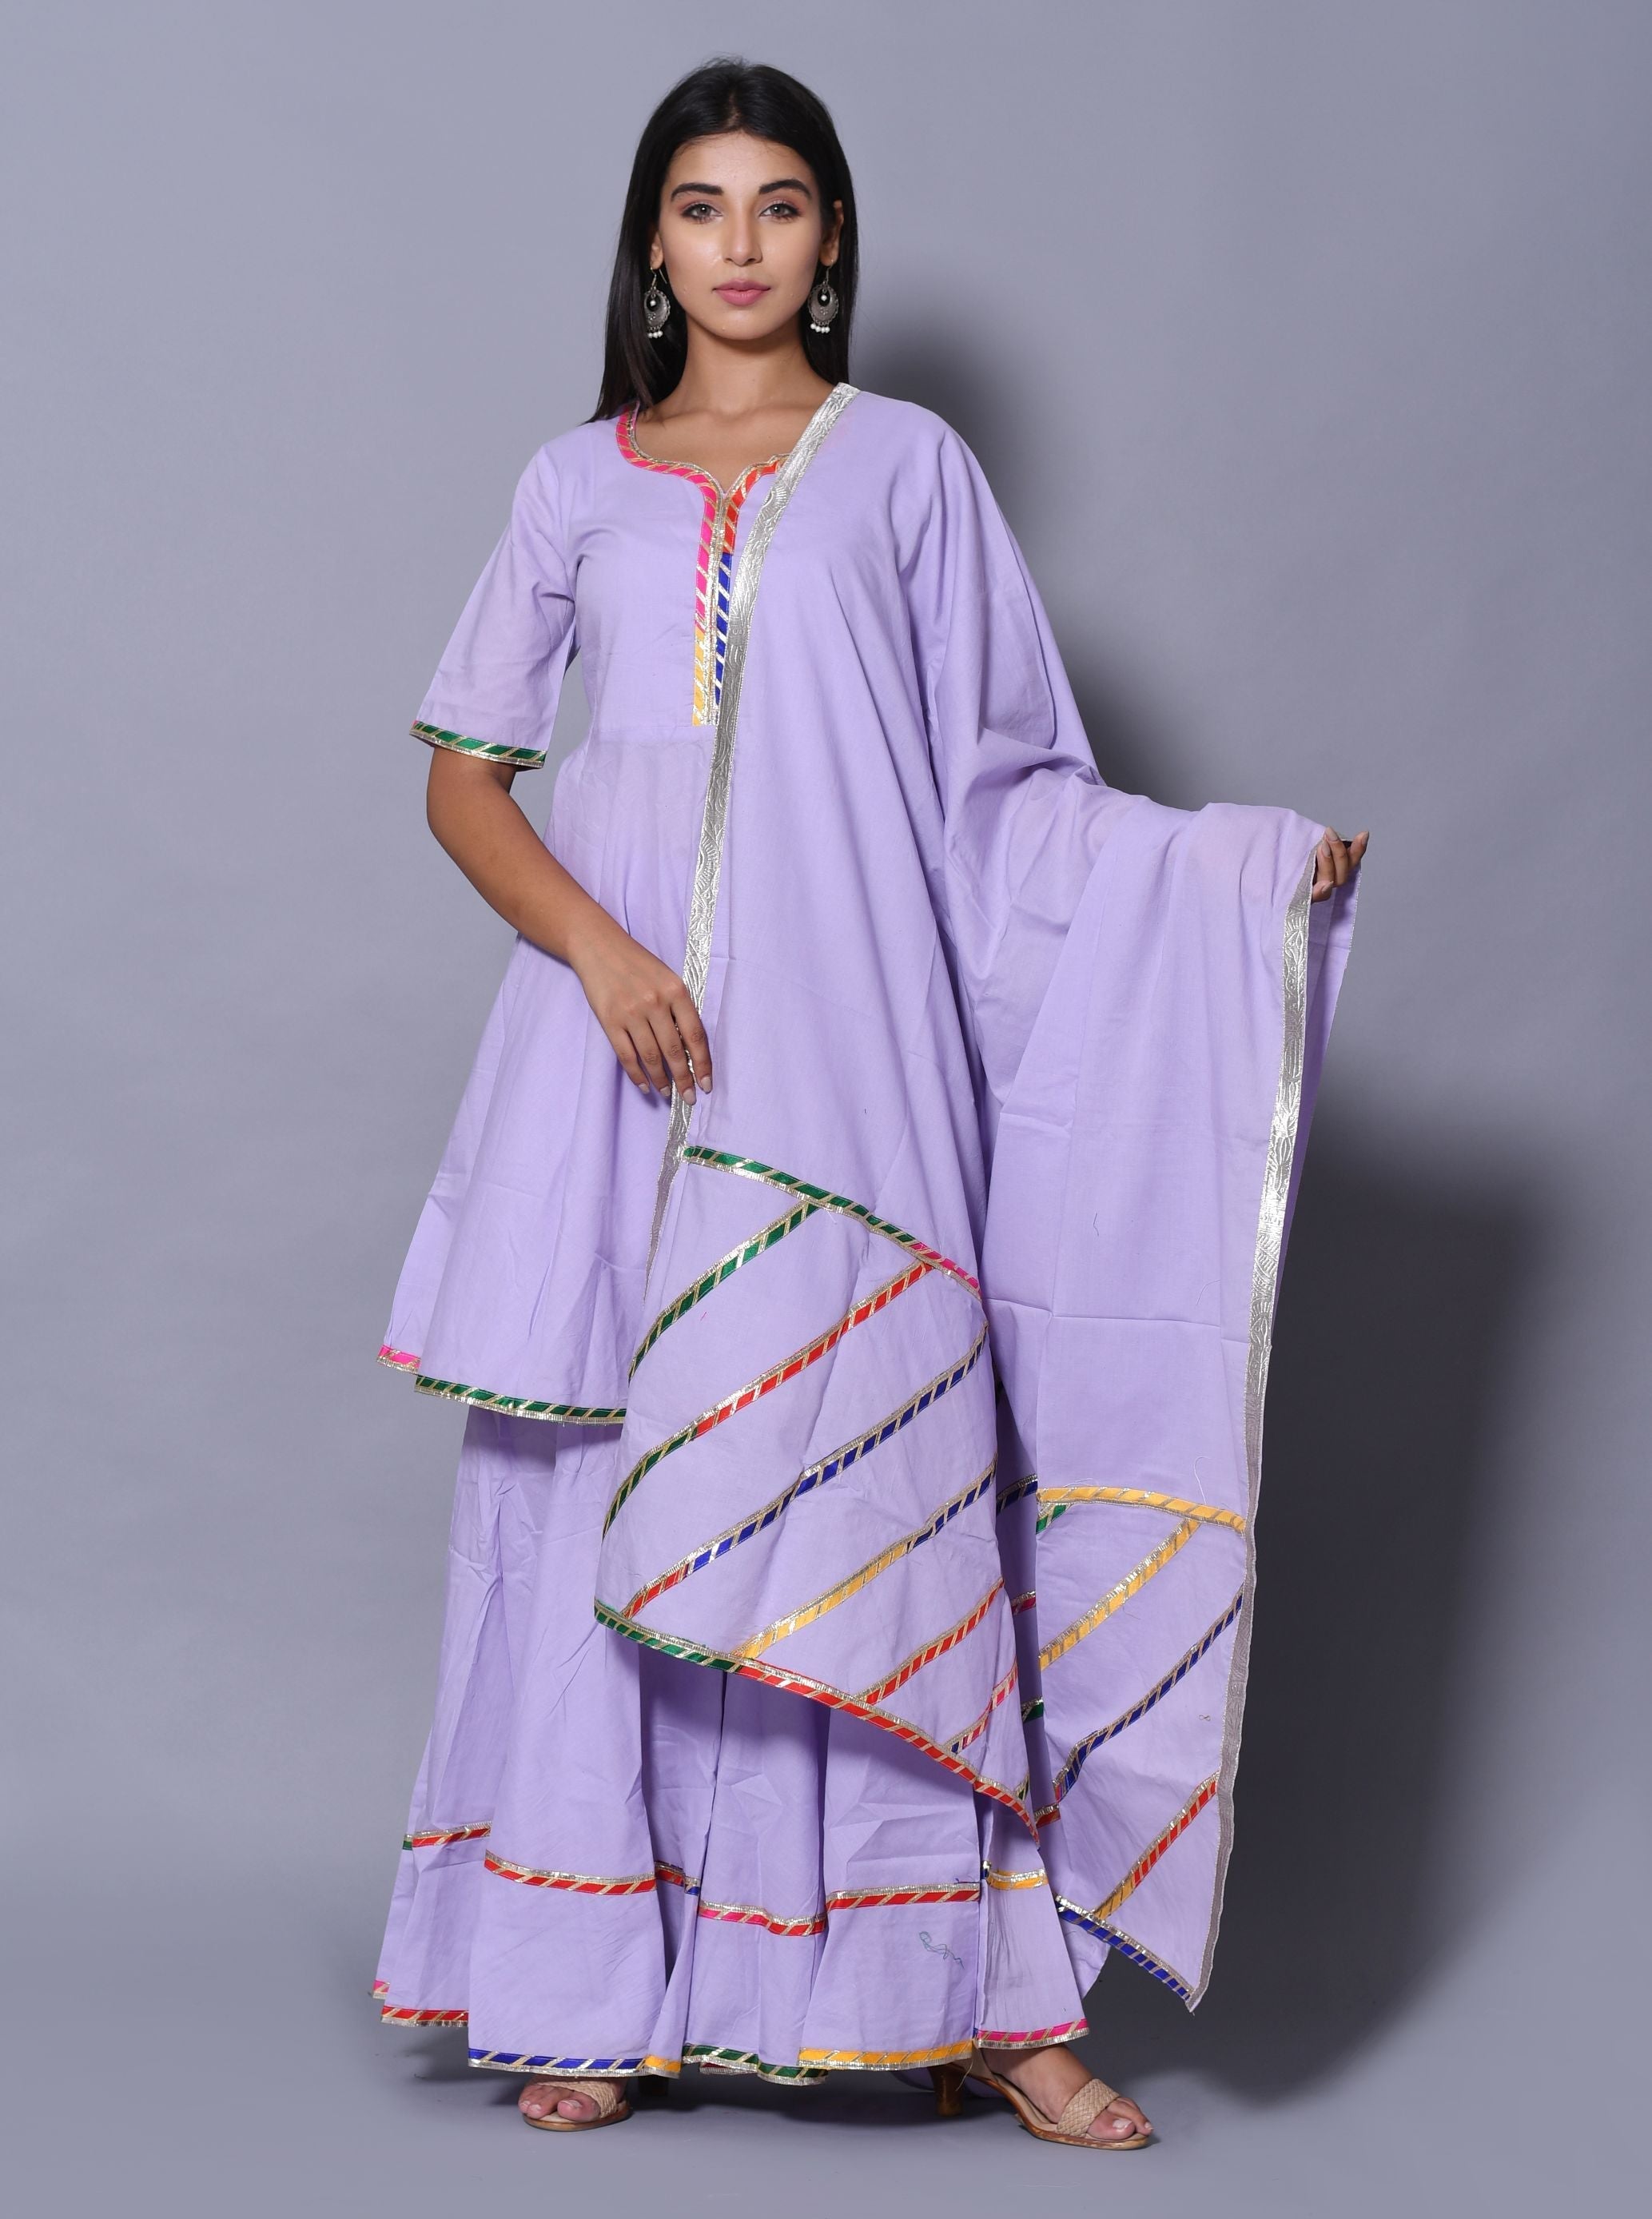 Women's Cotton Blue Anarkali Gown With Dupatta. - Saras The Label